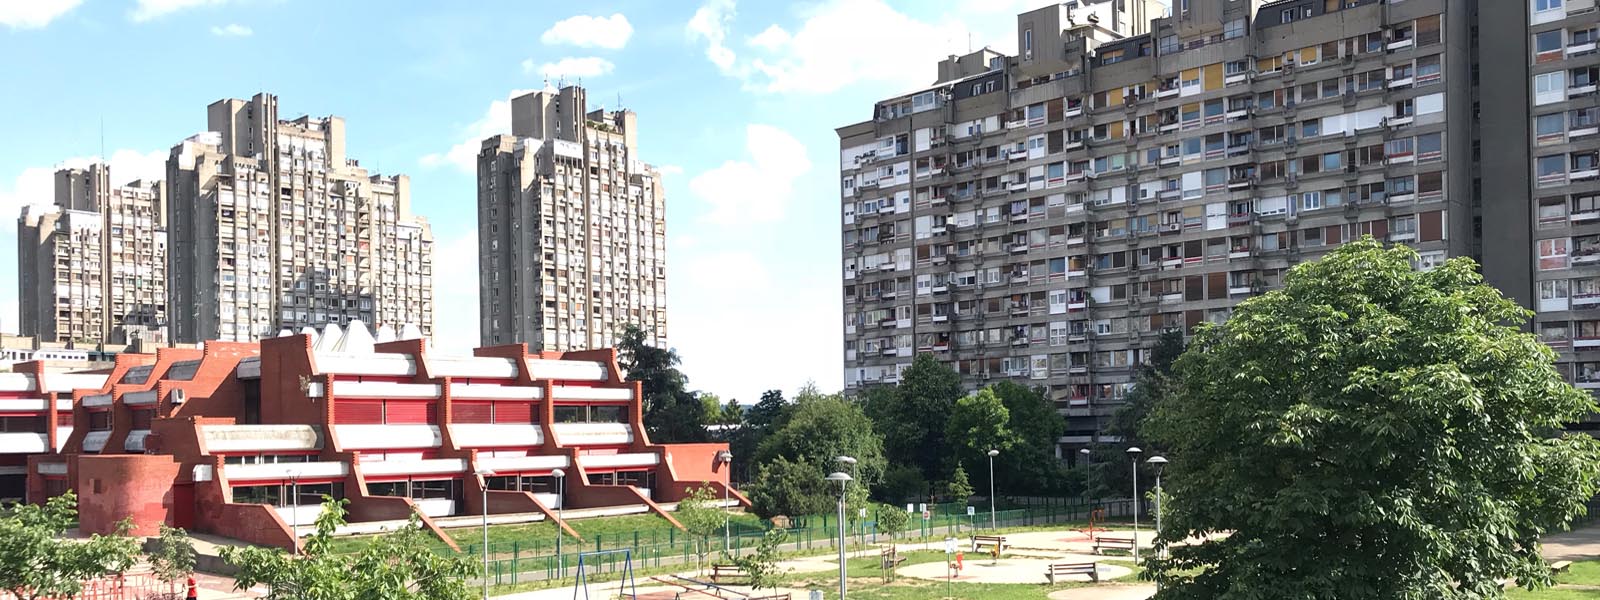 New Belgrade housing